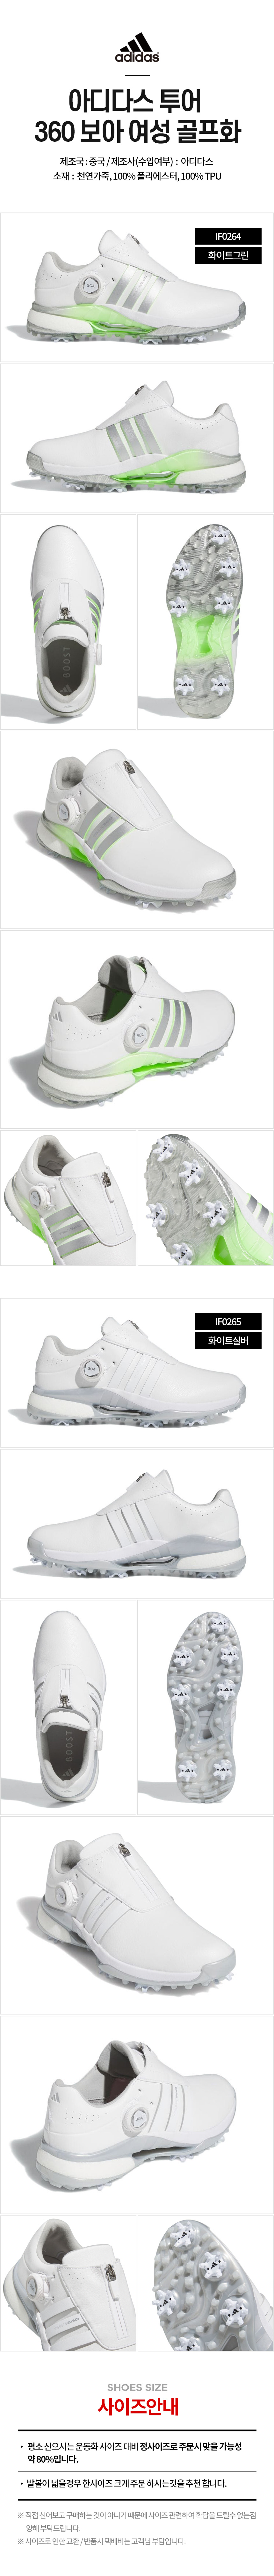 adidas_tour_360_golf_shoes_w_24.jpg